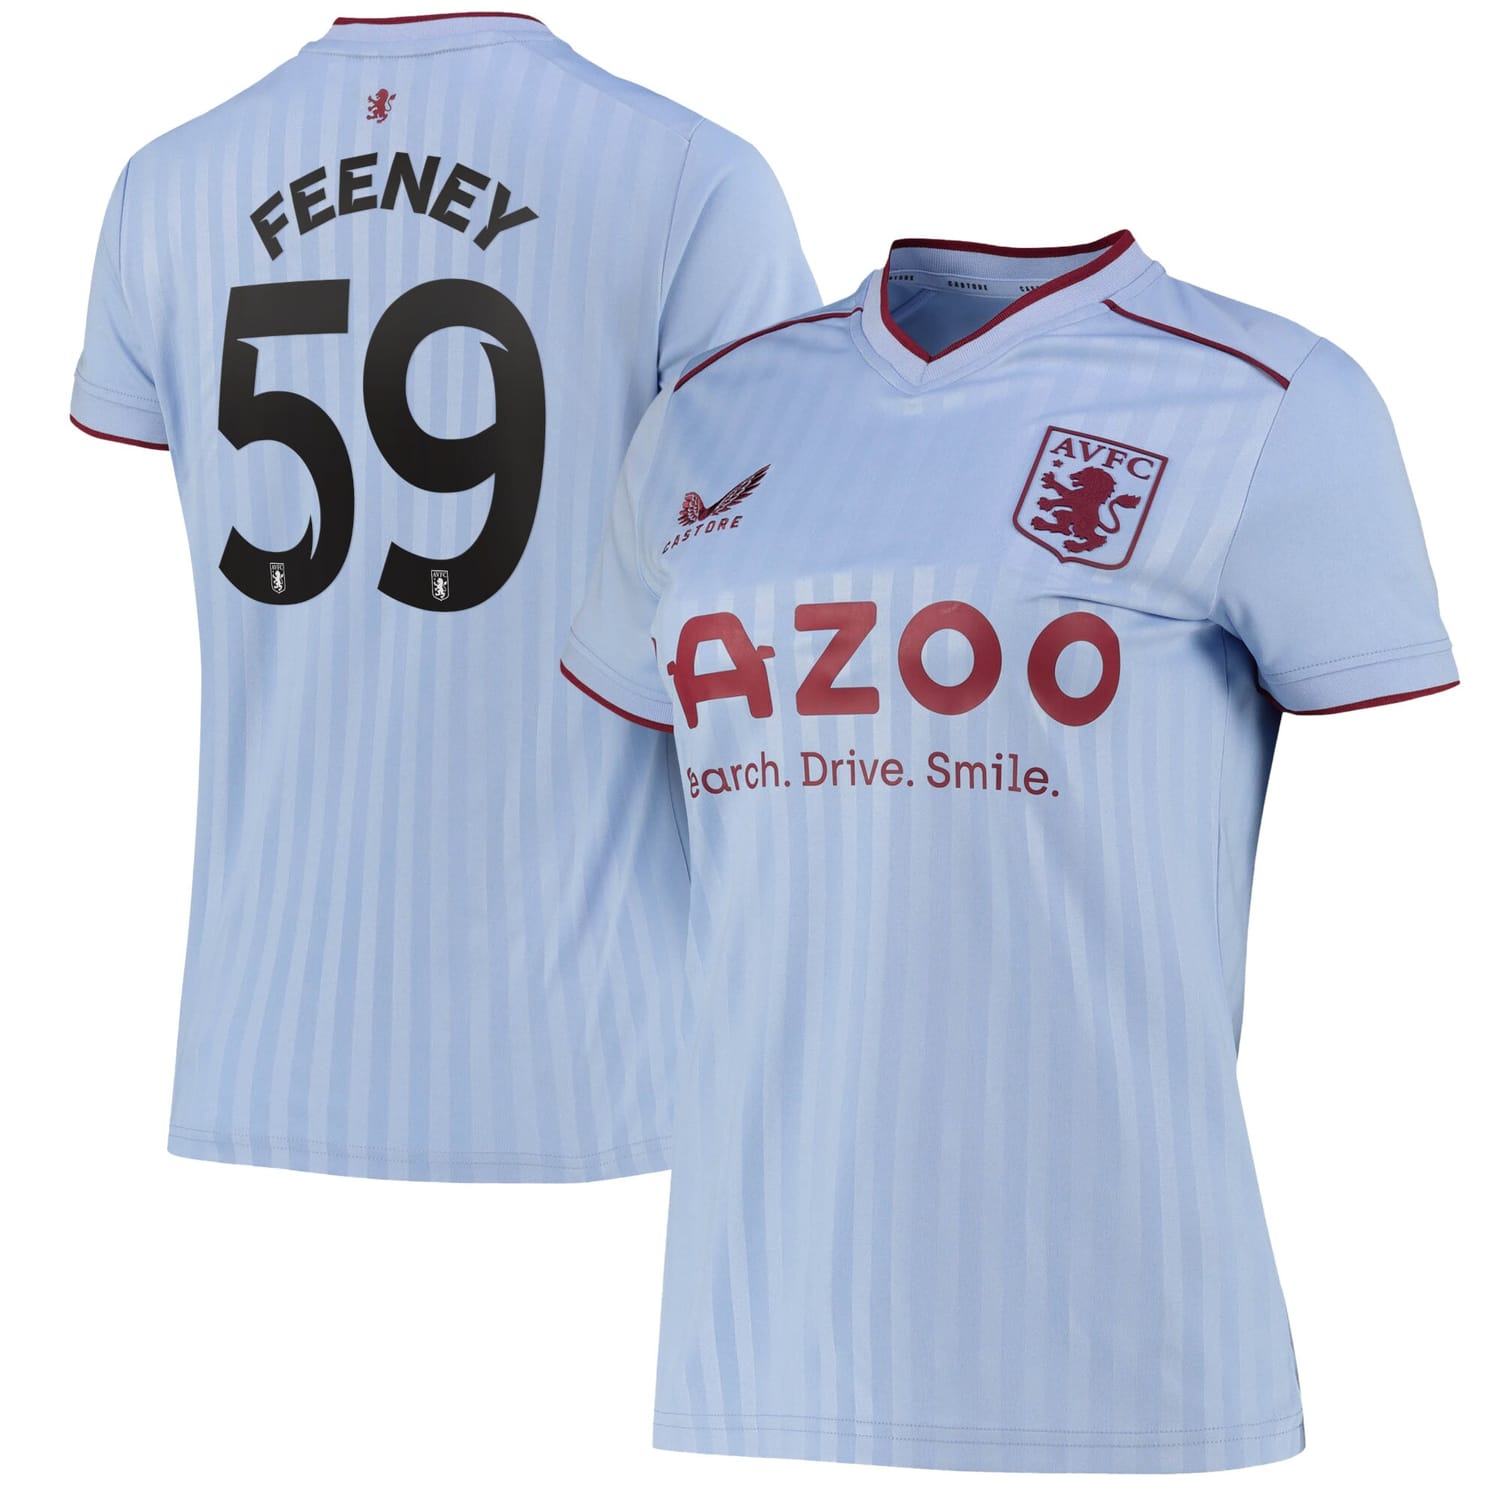 Premier League Aston Villa Away Cup Jersey Shirt 2022-23 player Joshua Feeney 59 printing for Women